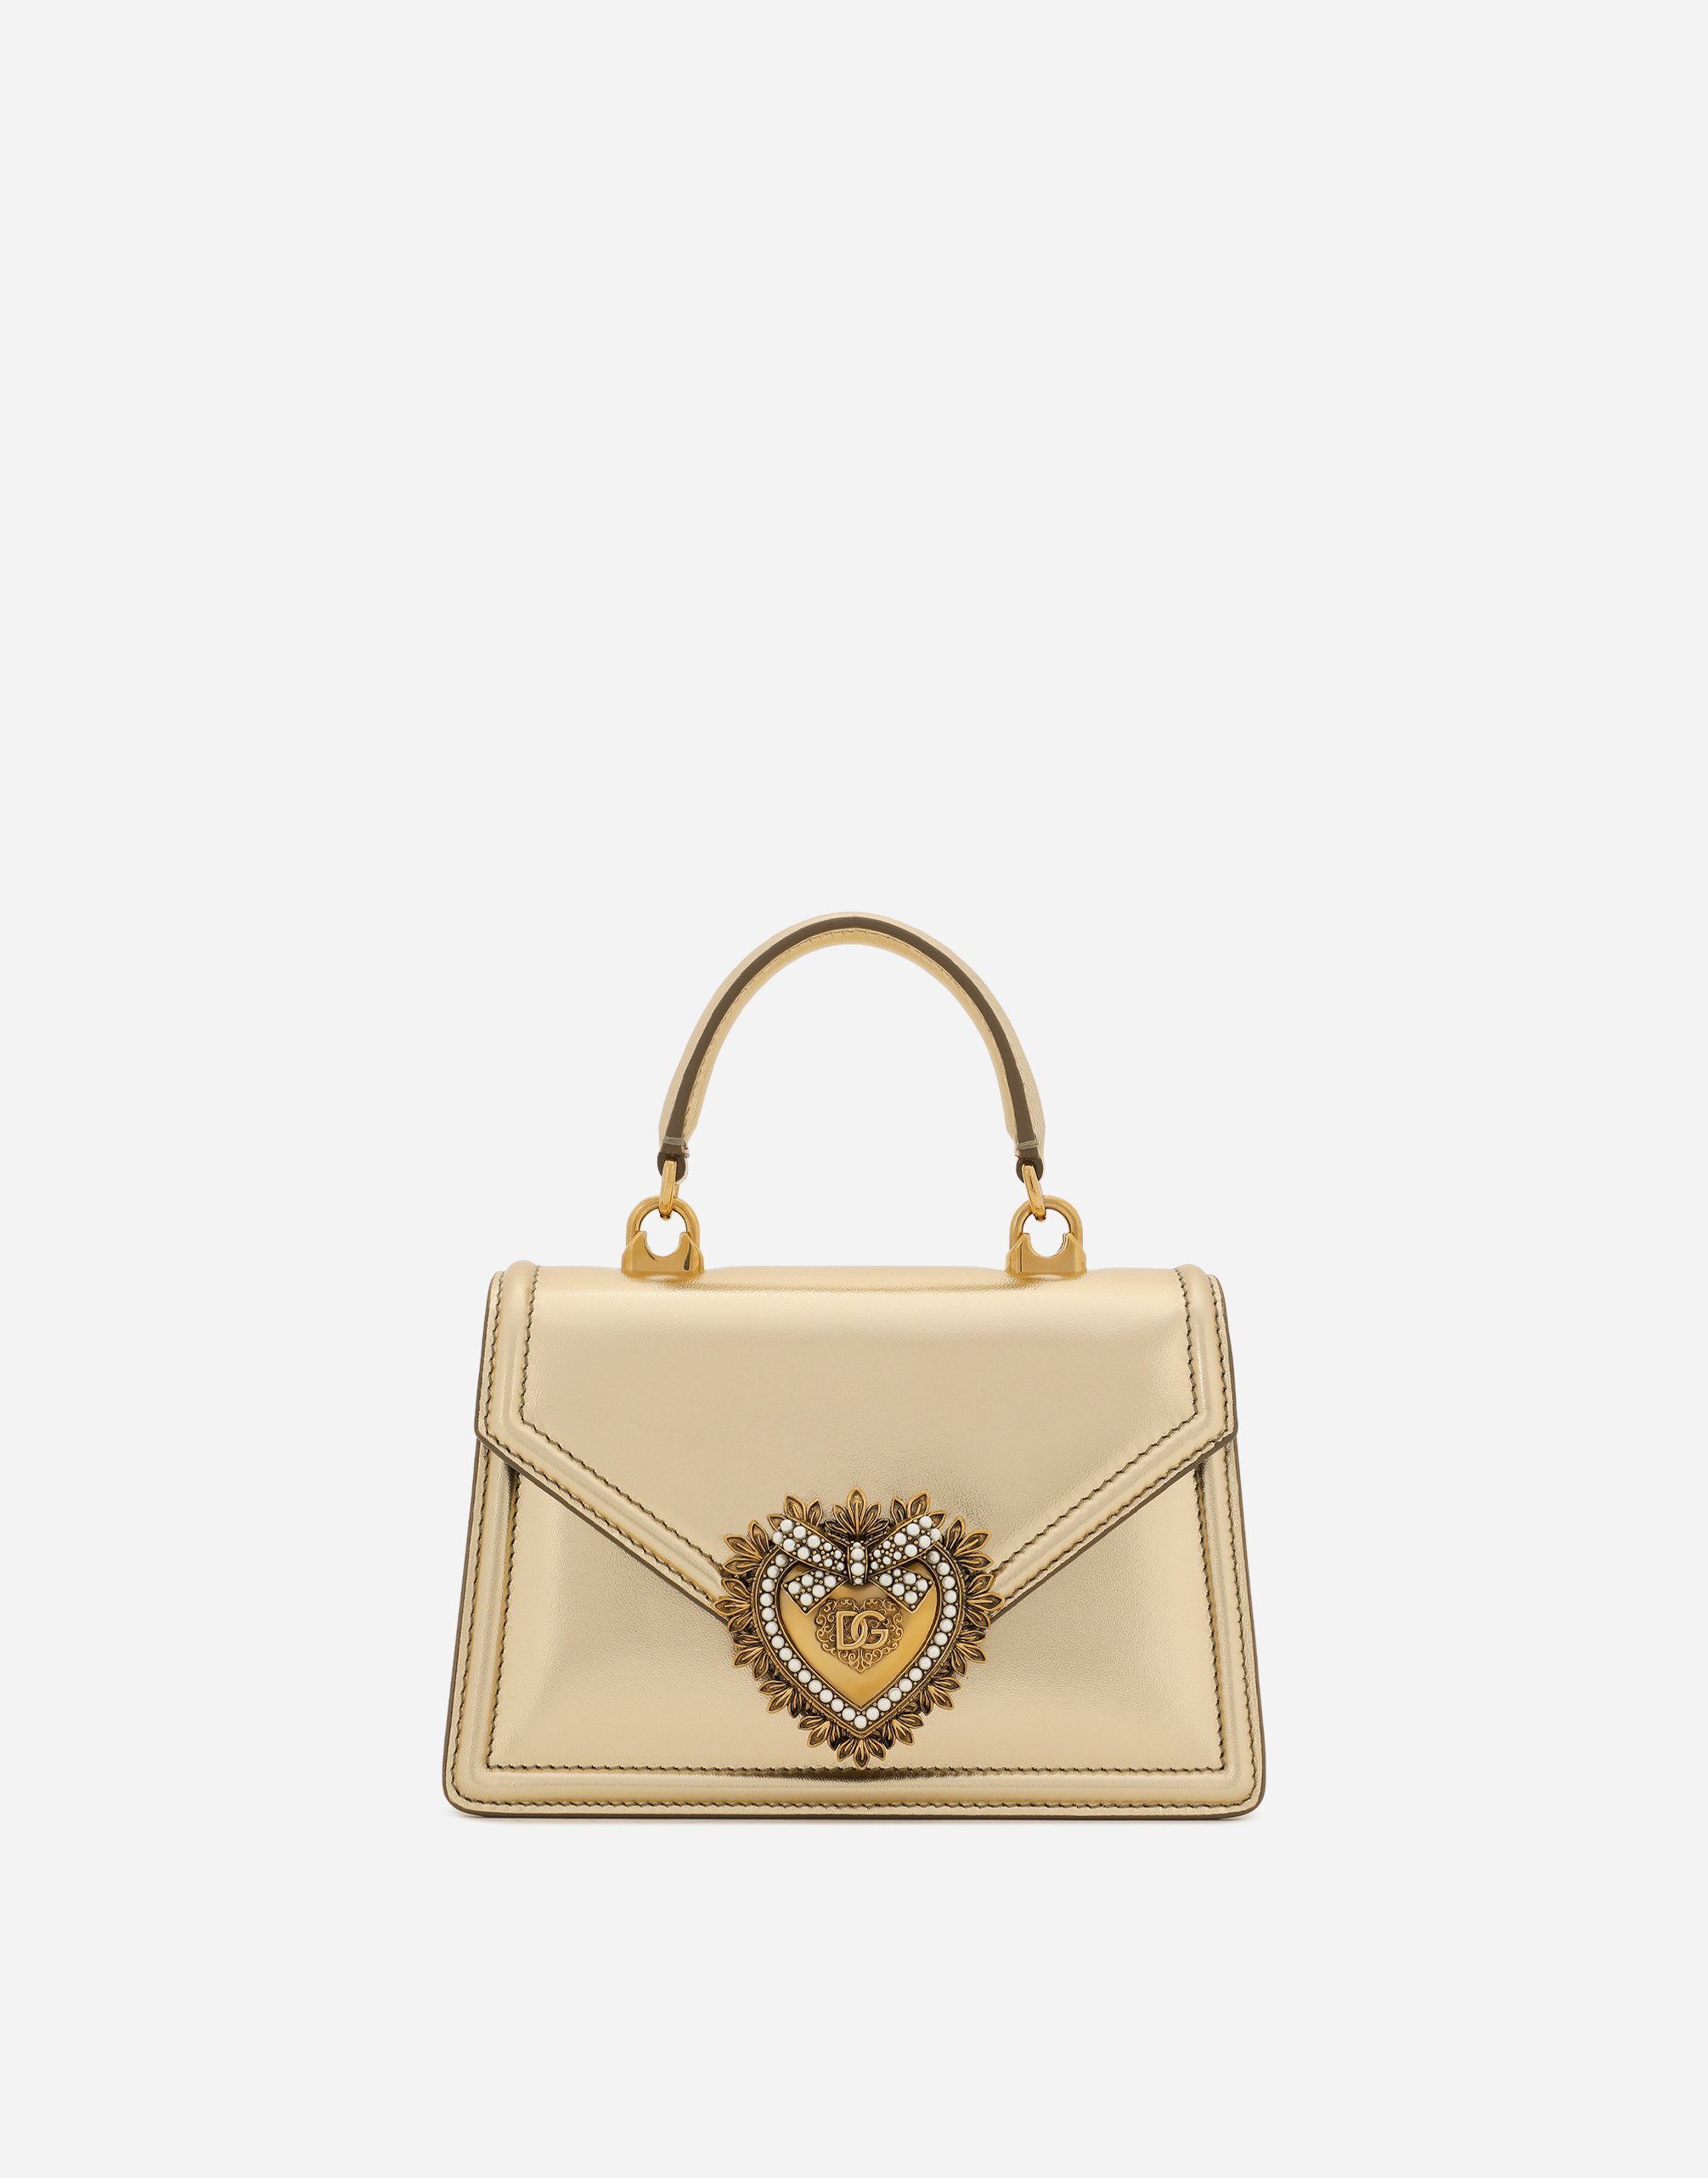 Small Devotion bag in nappa mordore leather in Gold